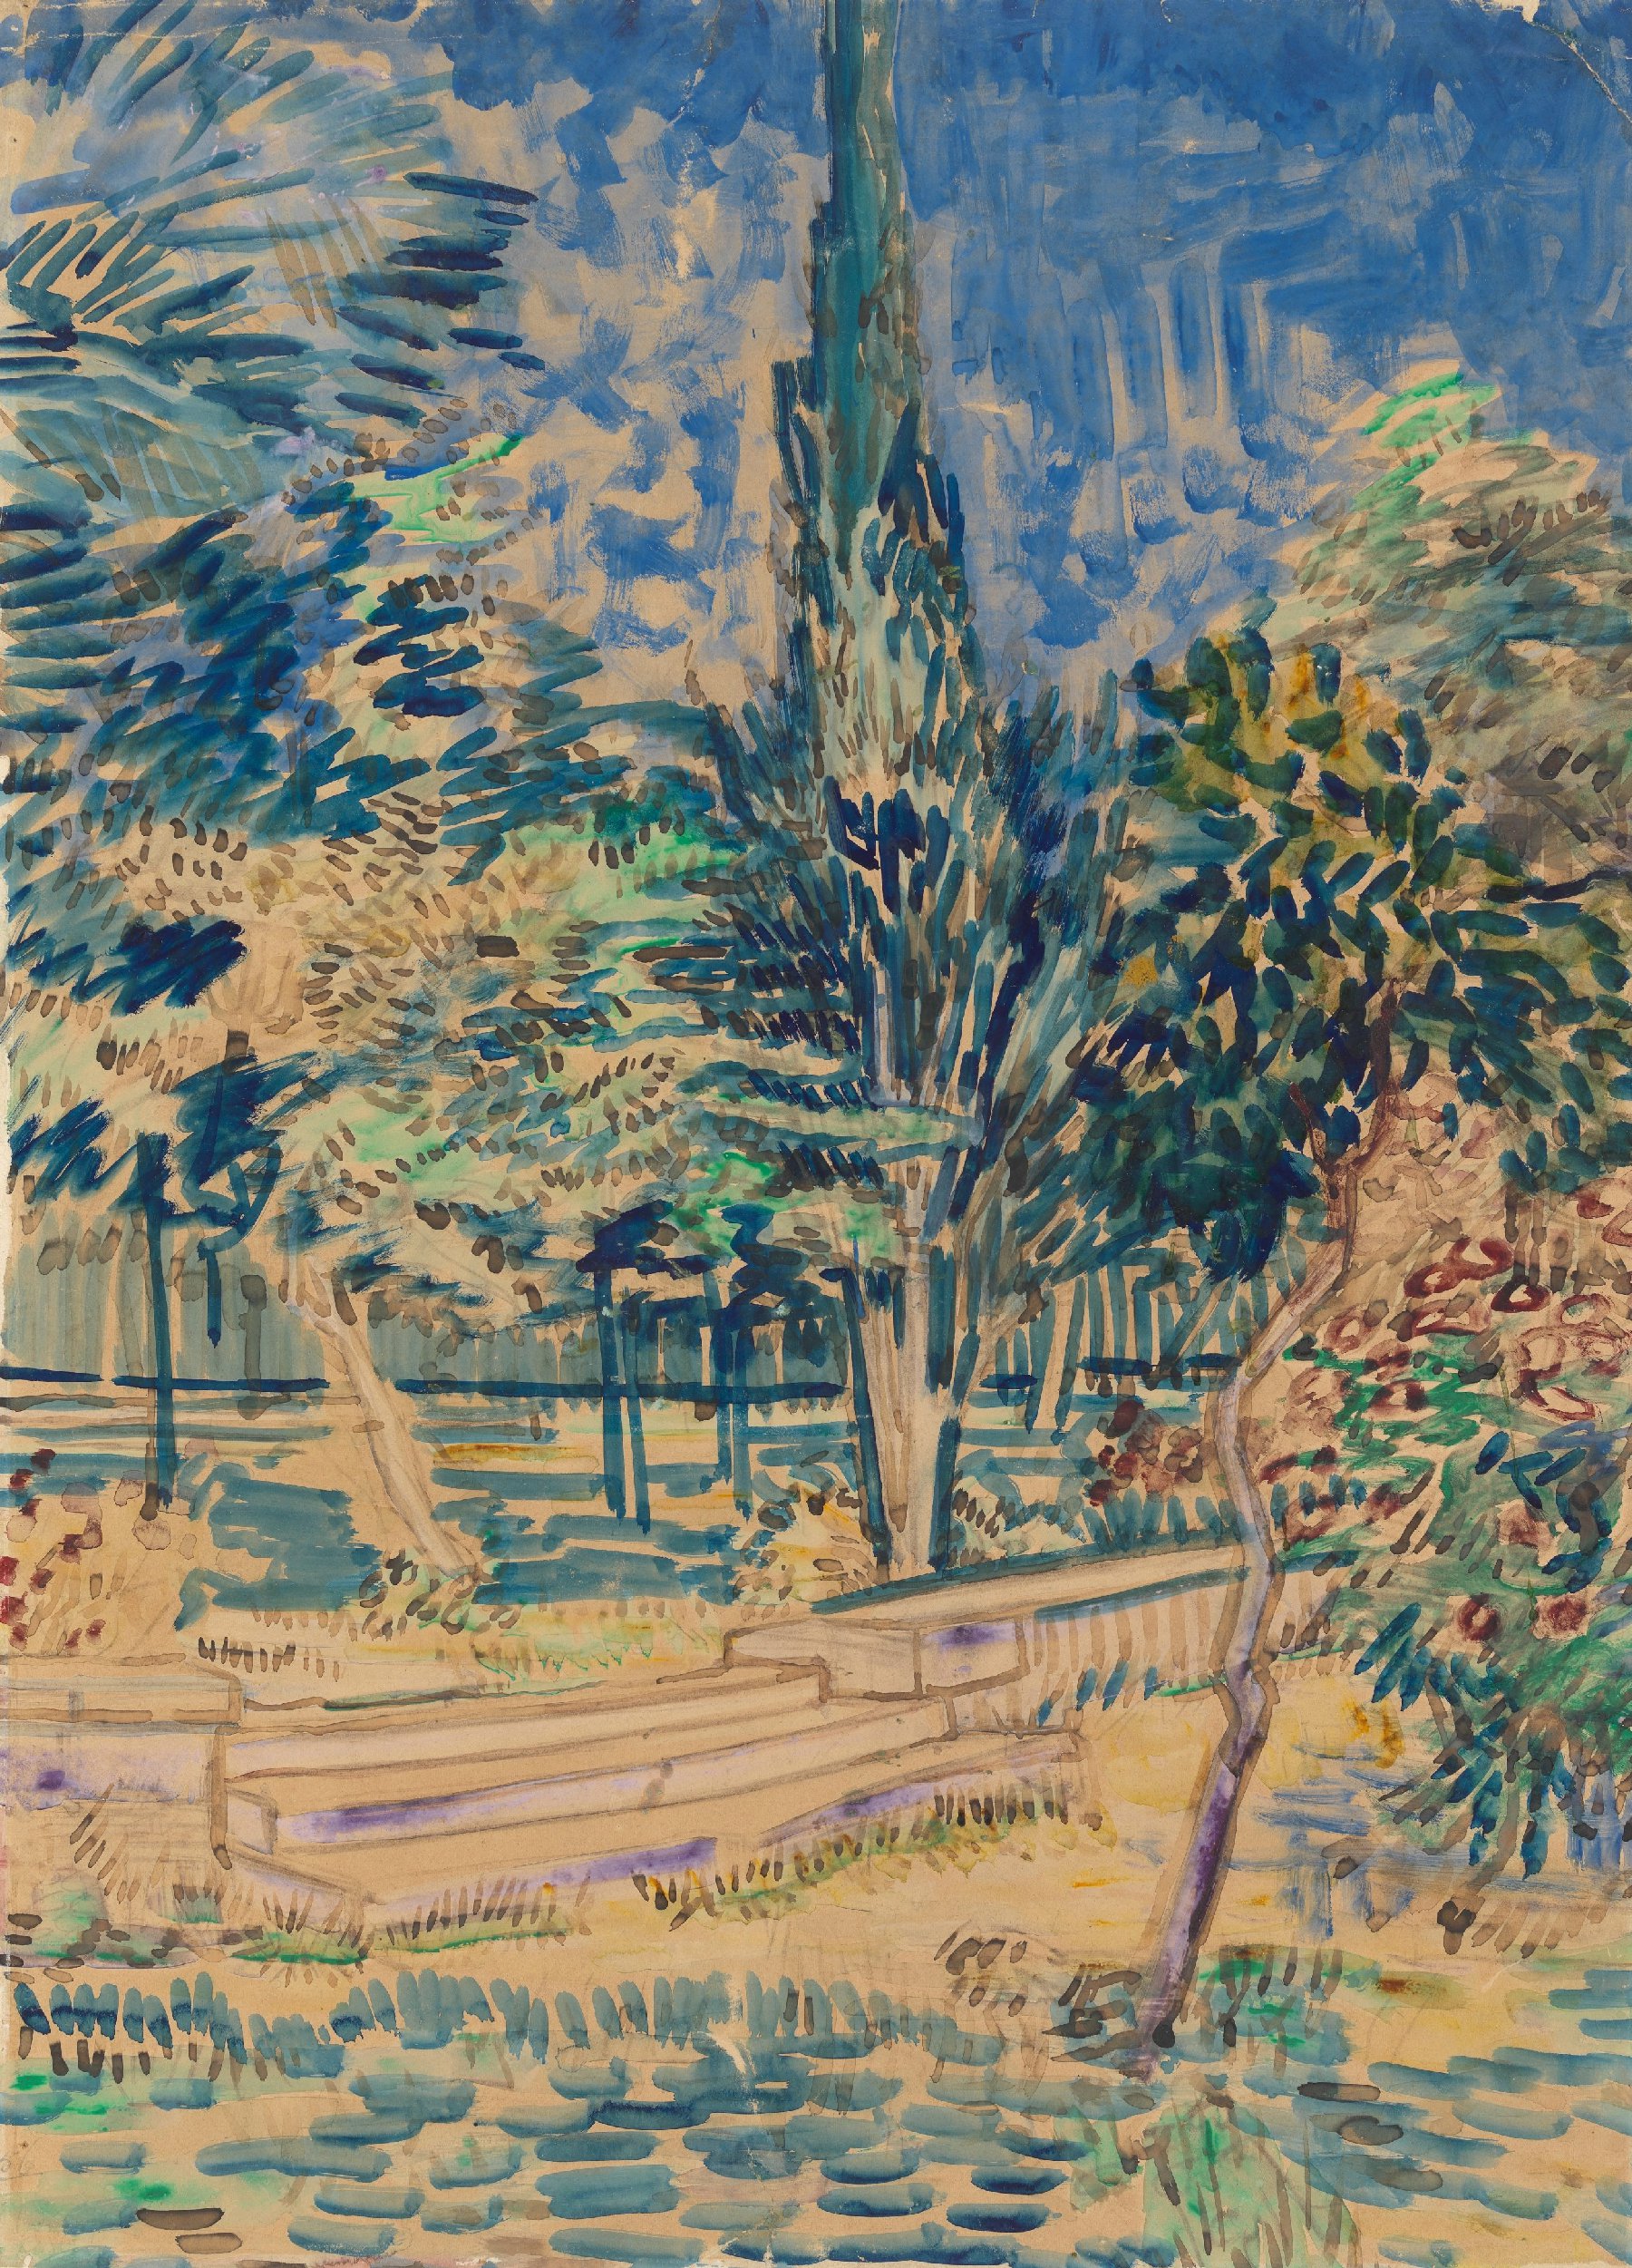 Trap in de tuin van de inrichting Vincent van Gogh (1853 - 1890), Saint-Rémy-de-Provence, mei-juni 1889